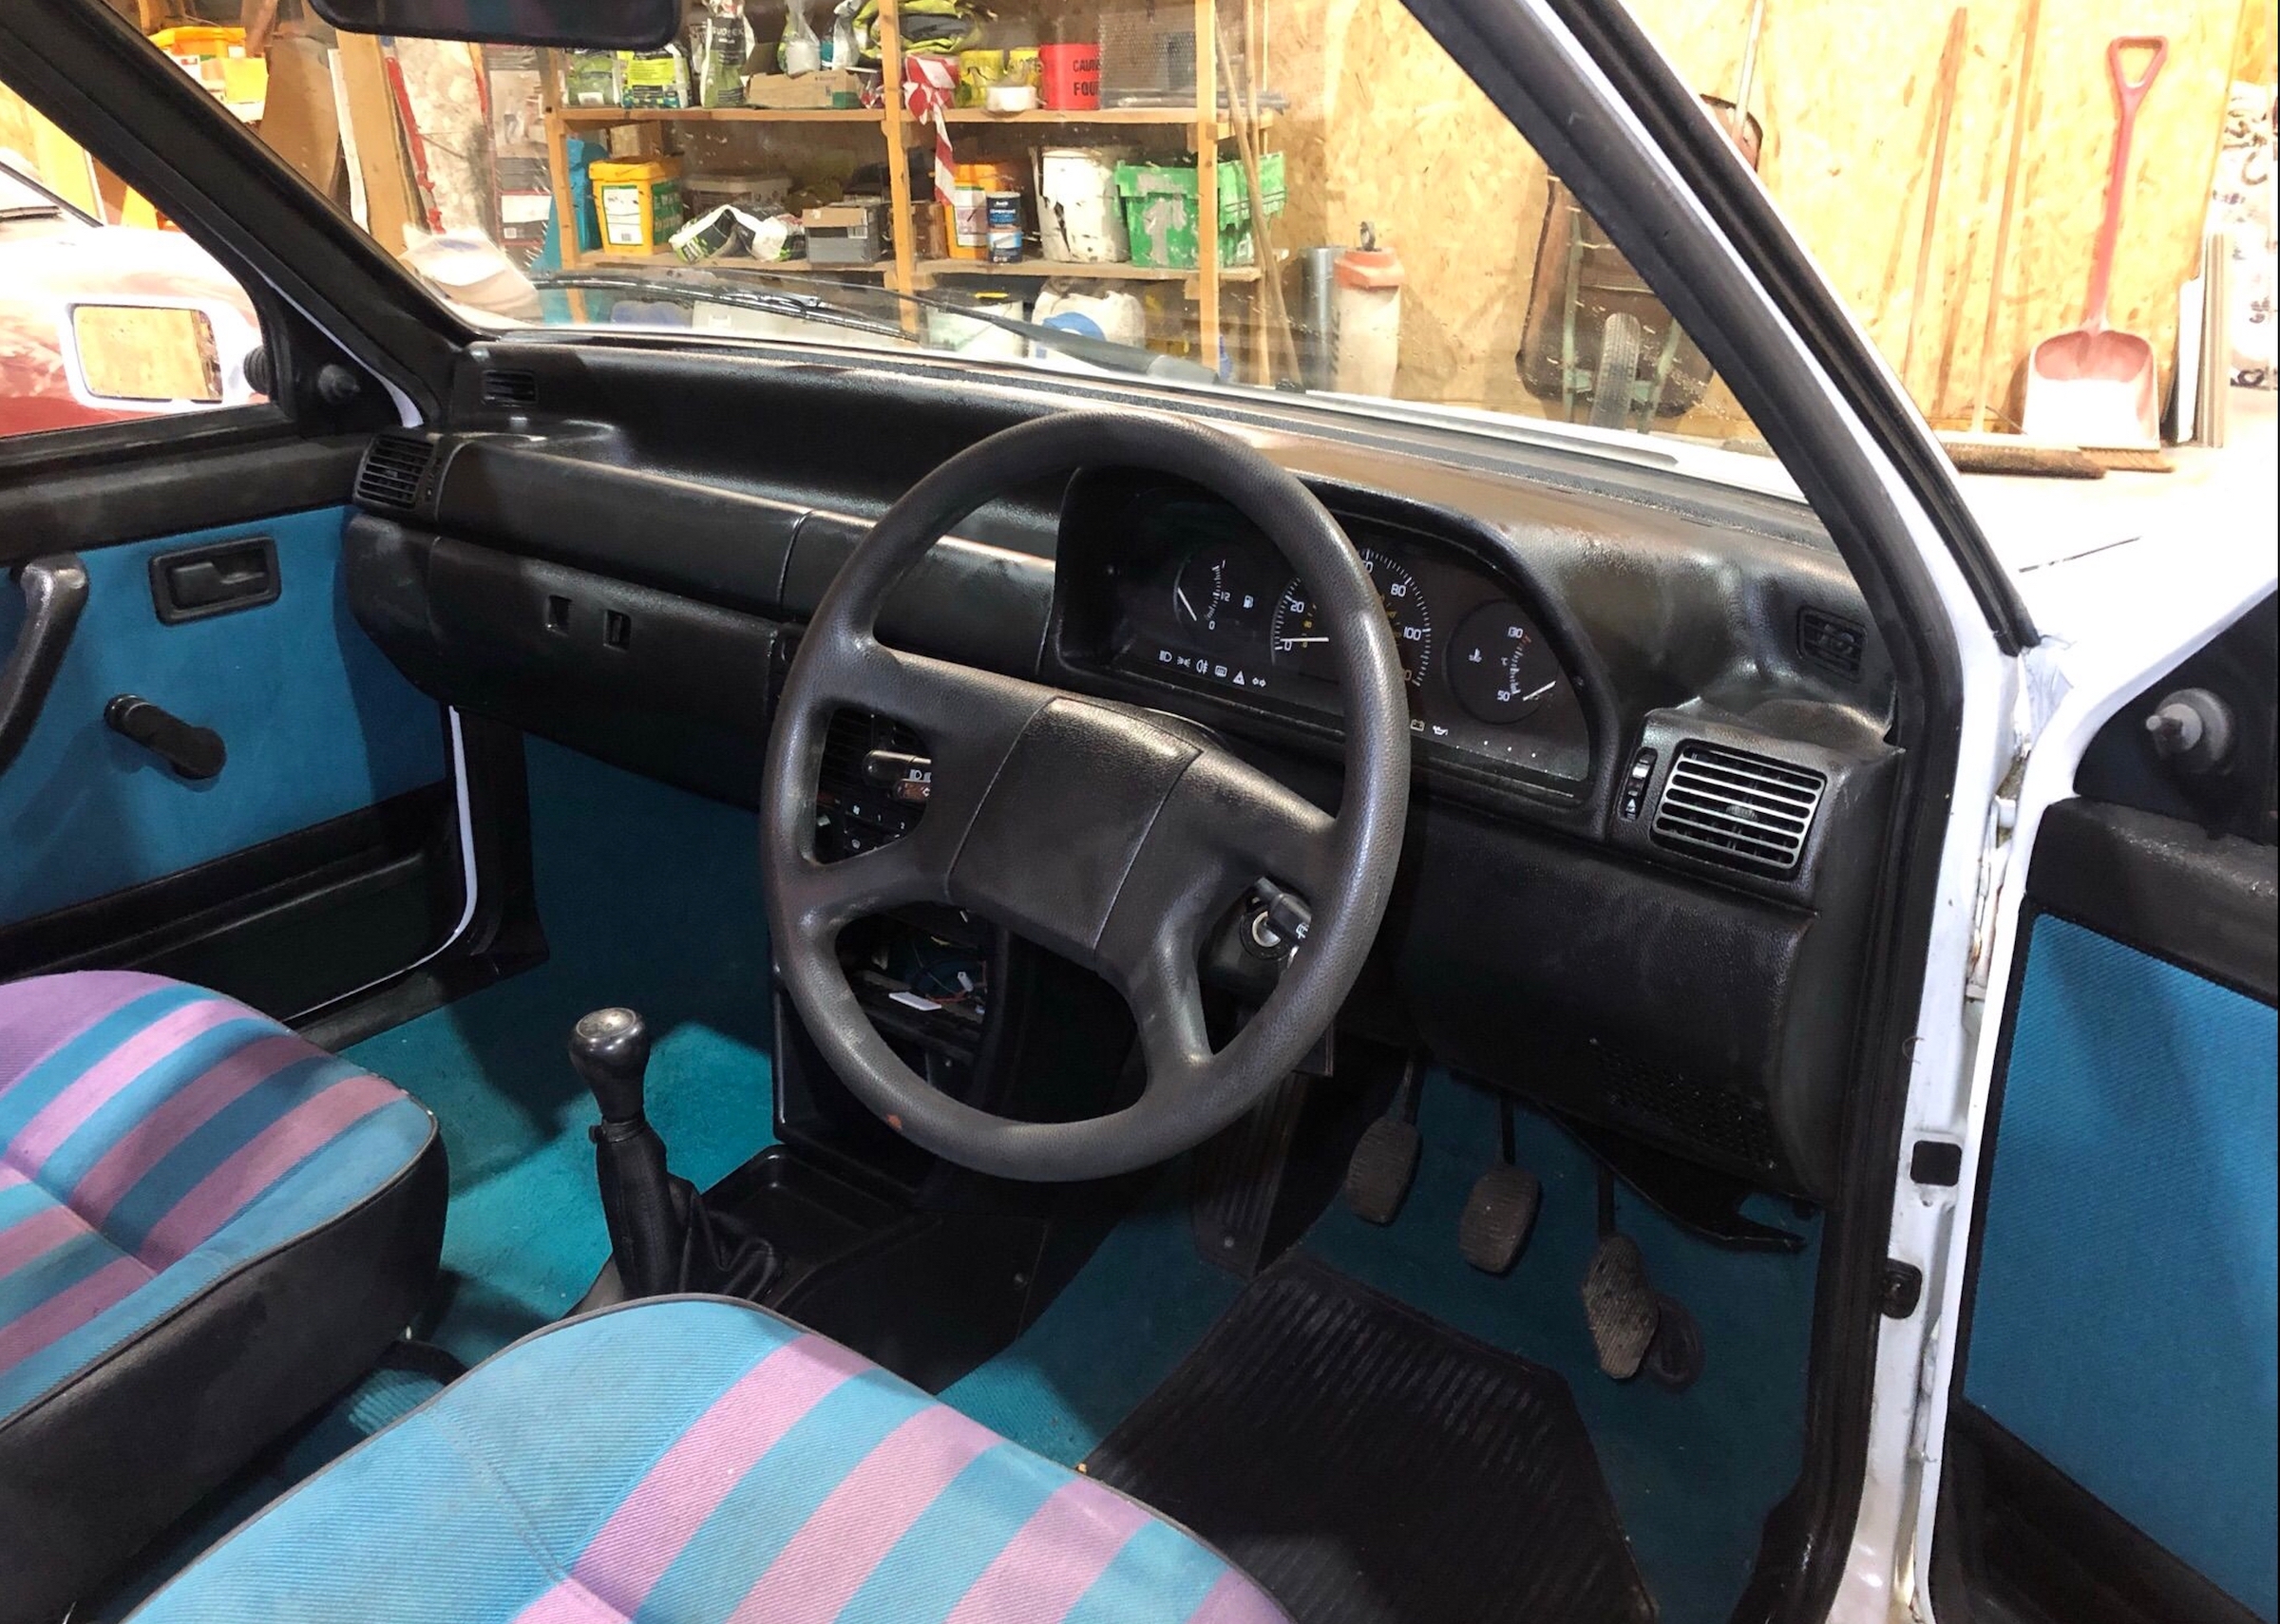 Fiat Uno interior